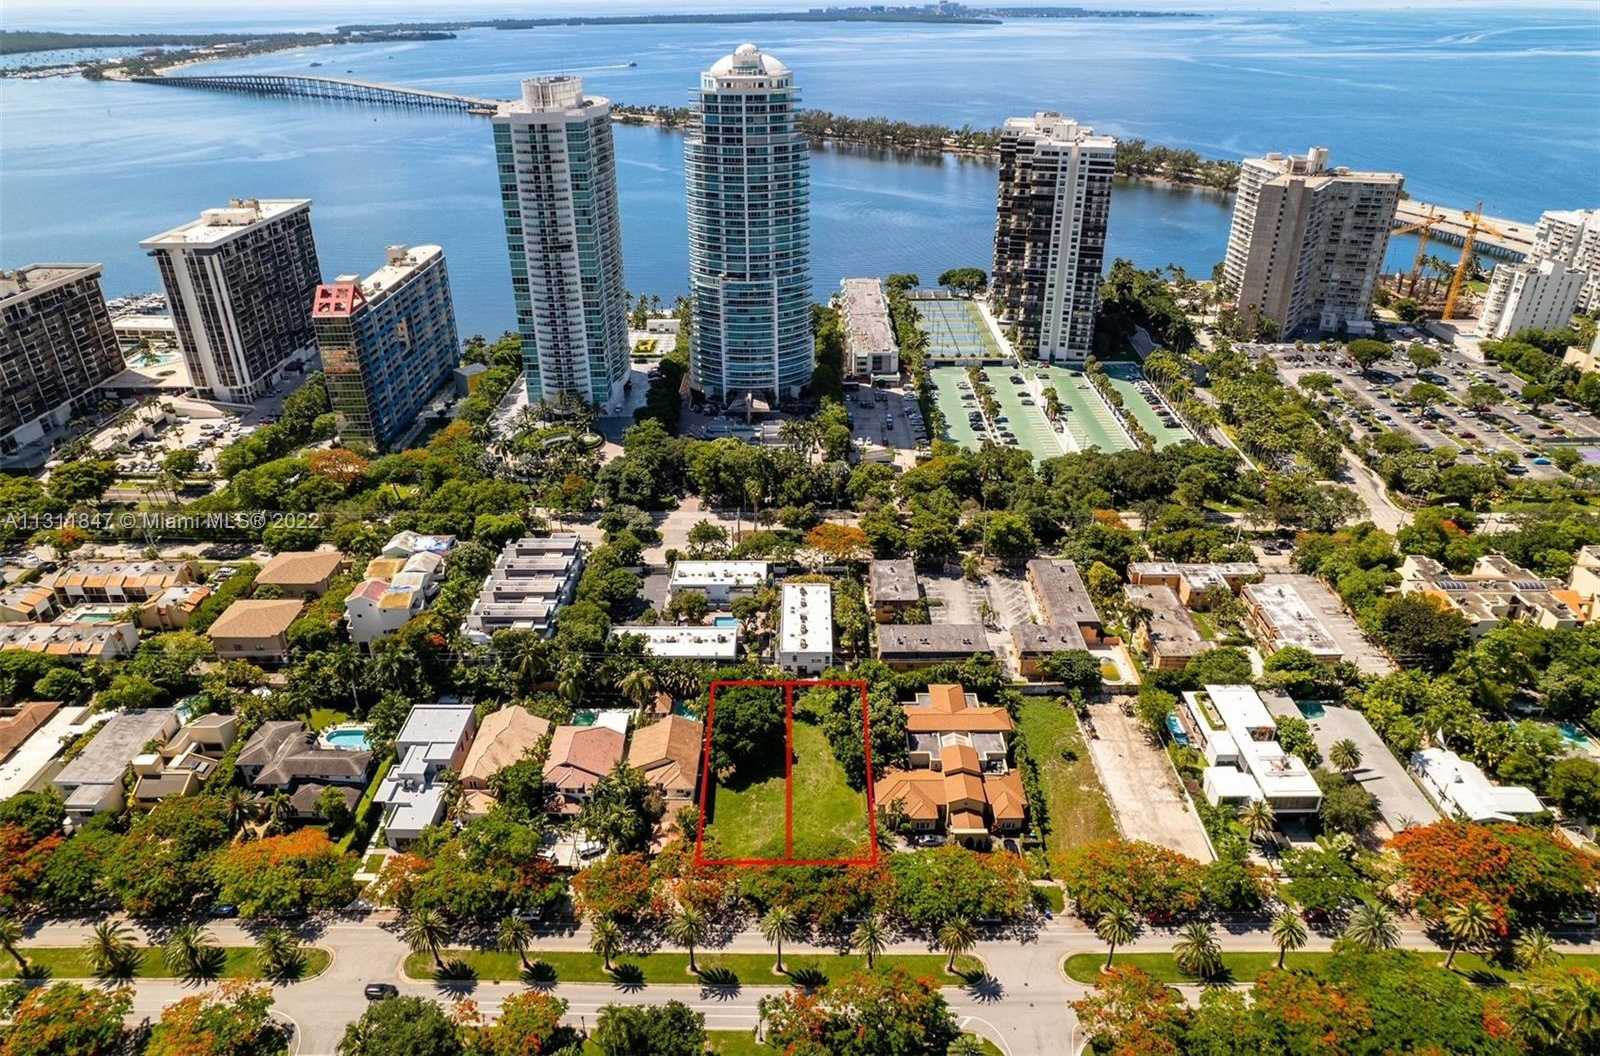 View Miami, FL 33129 property